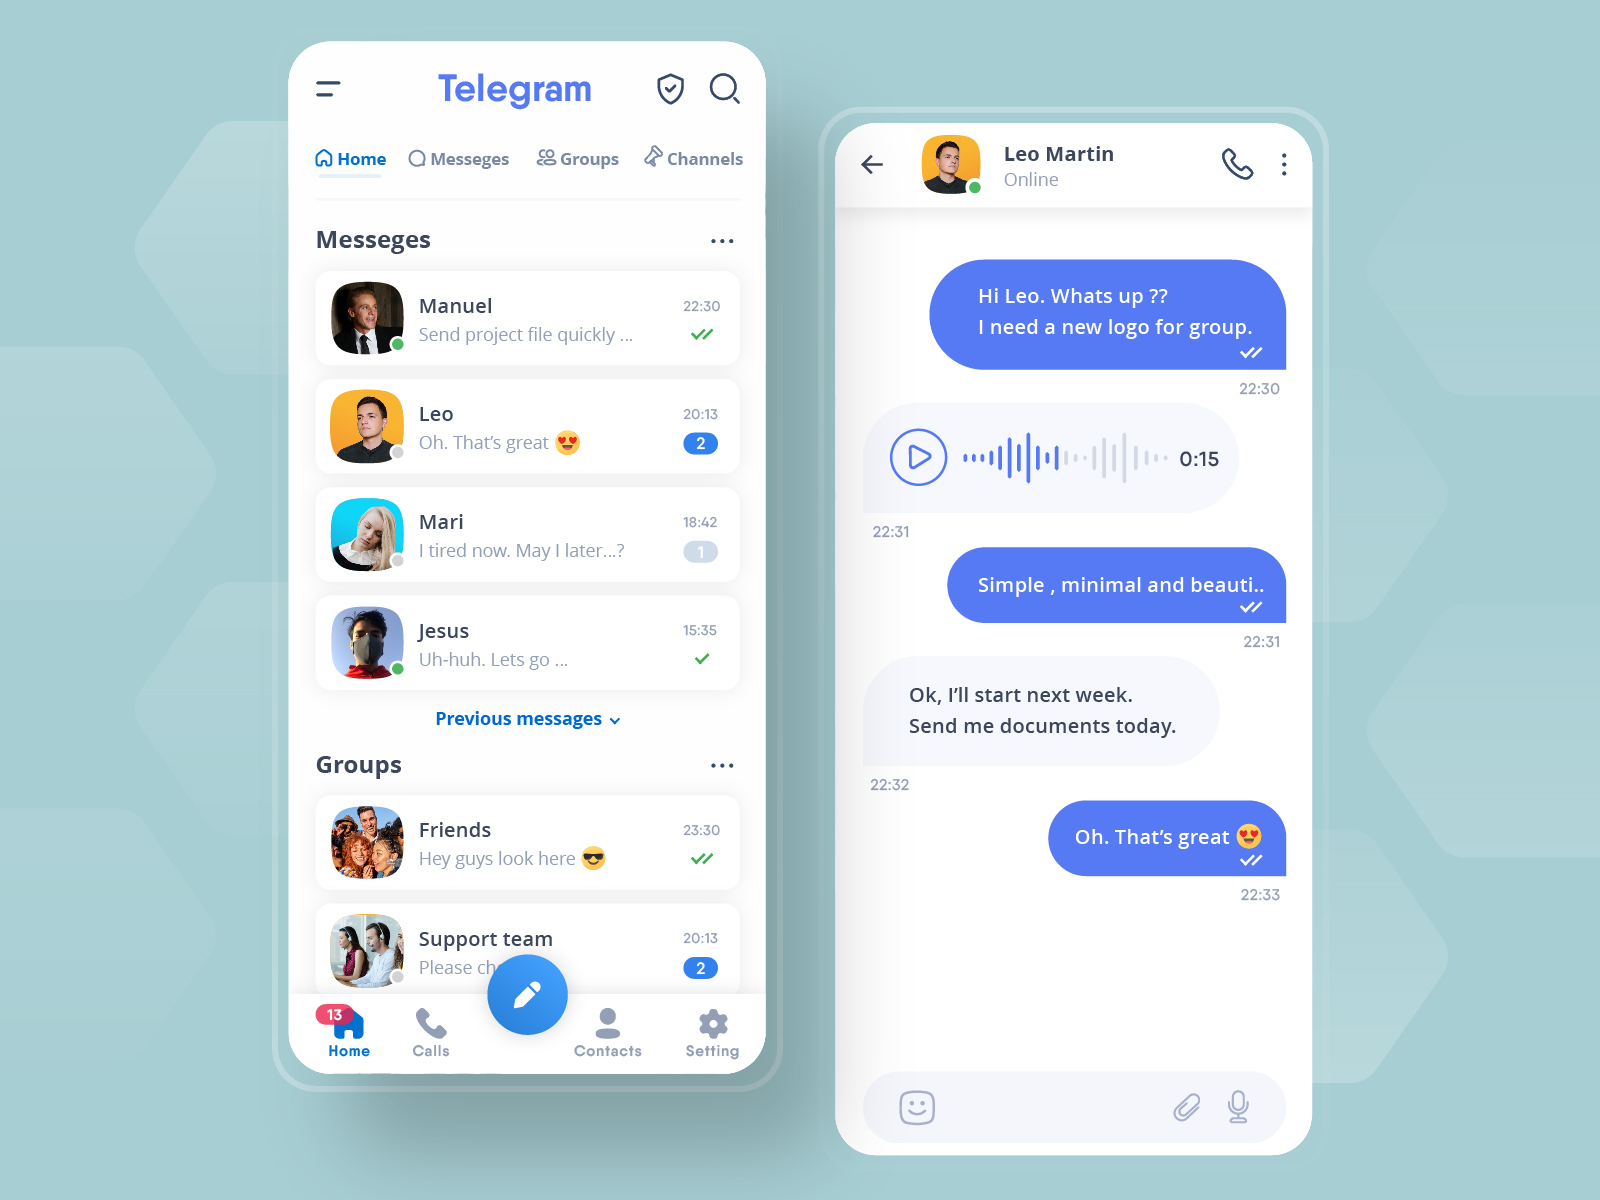 telegram messenger download